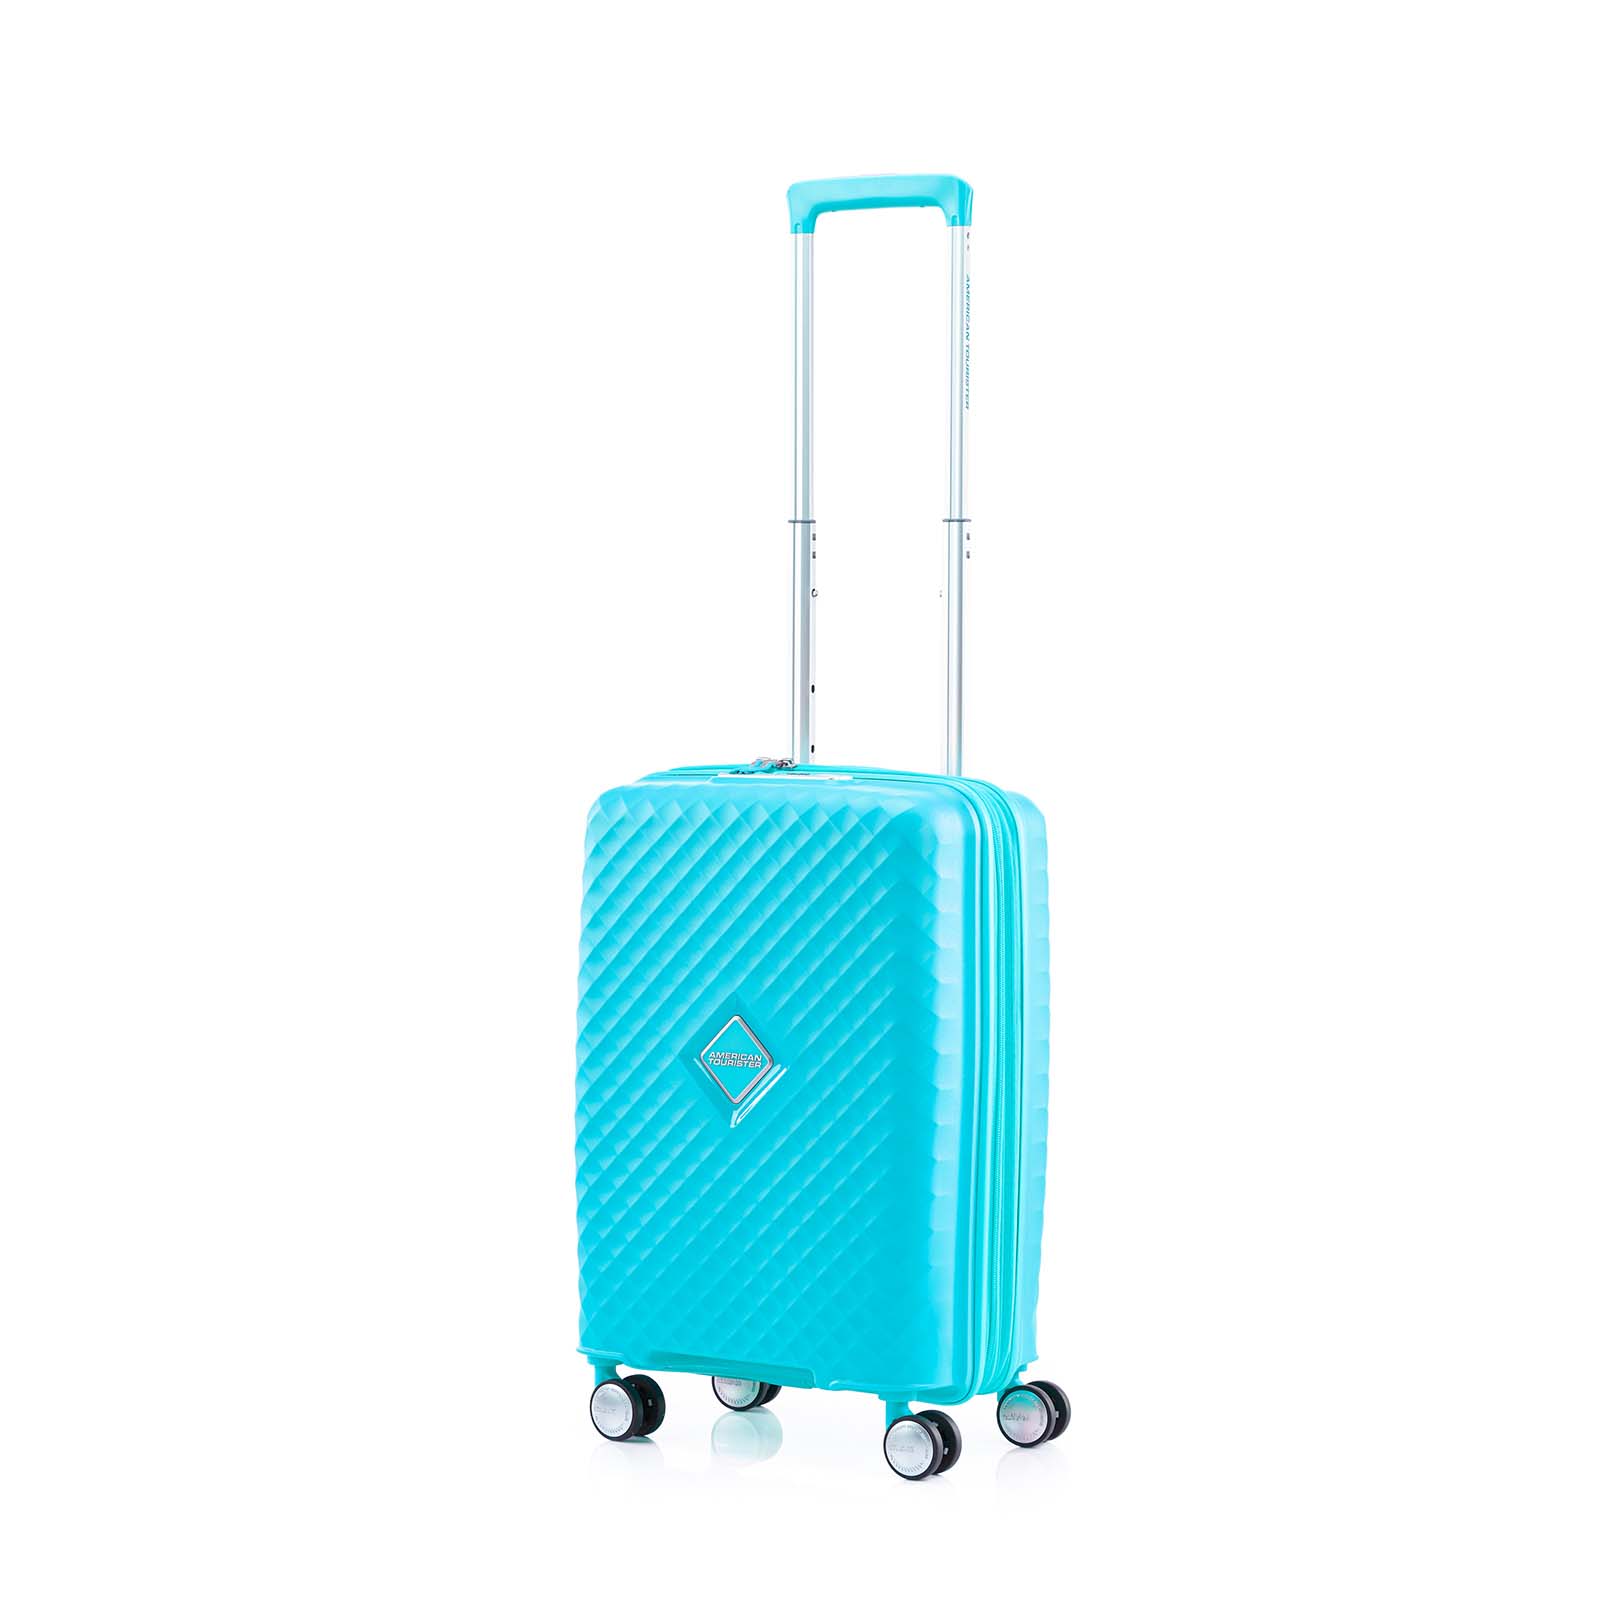 American-Tourister-Squasem-55cm-Carry-On-Suitcase-Aqua-Blue-Front-Angle